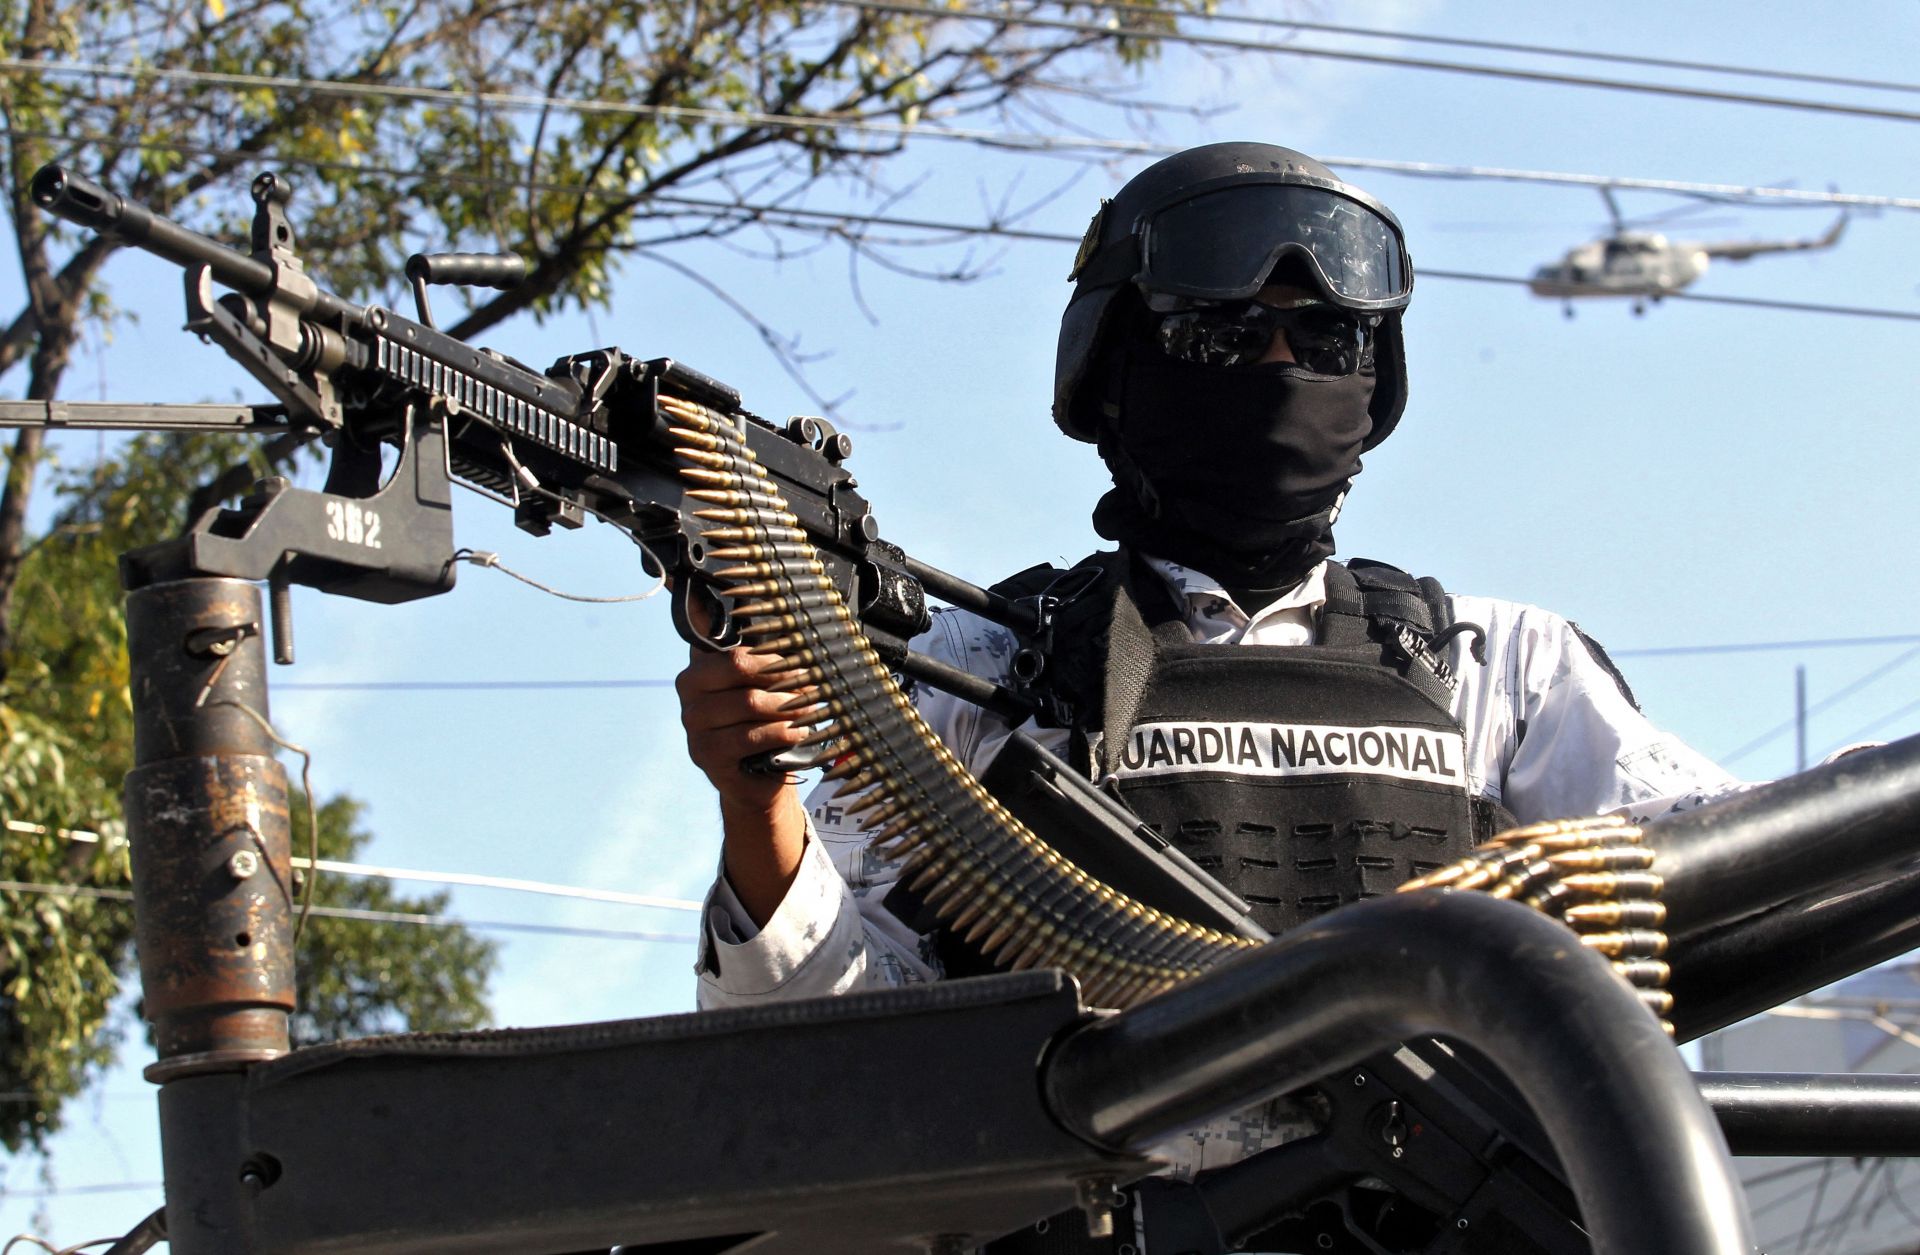 A member of the National Guard on Dec. 2, 2021, in Guadalajara, Mexico.